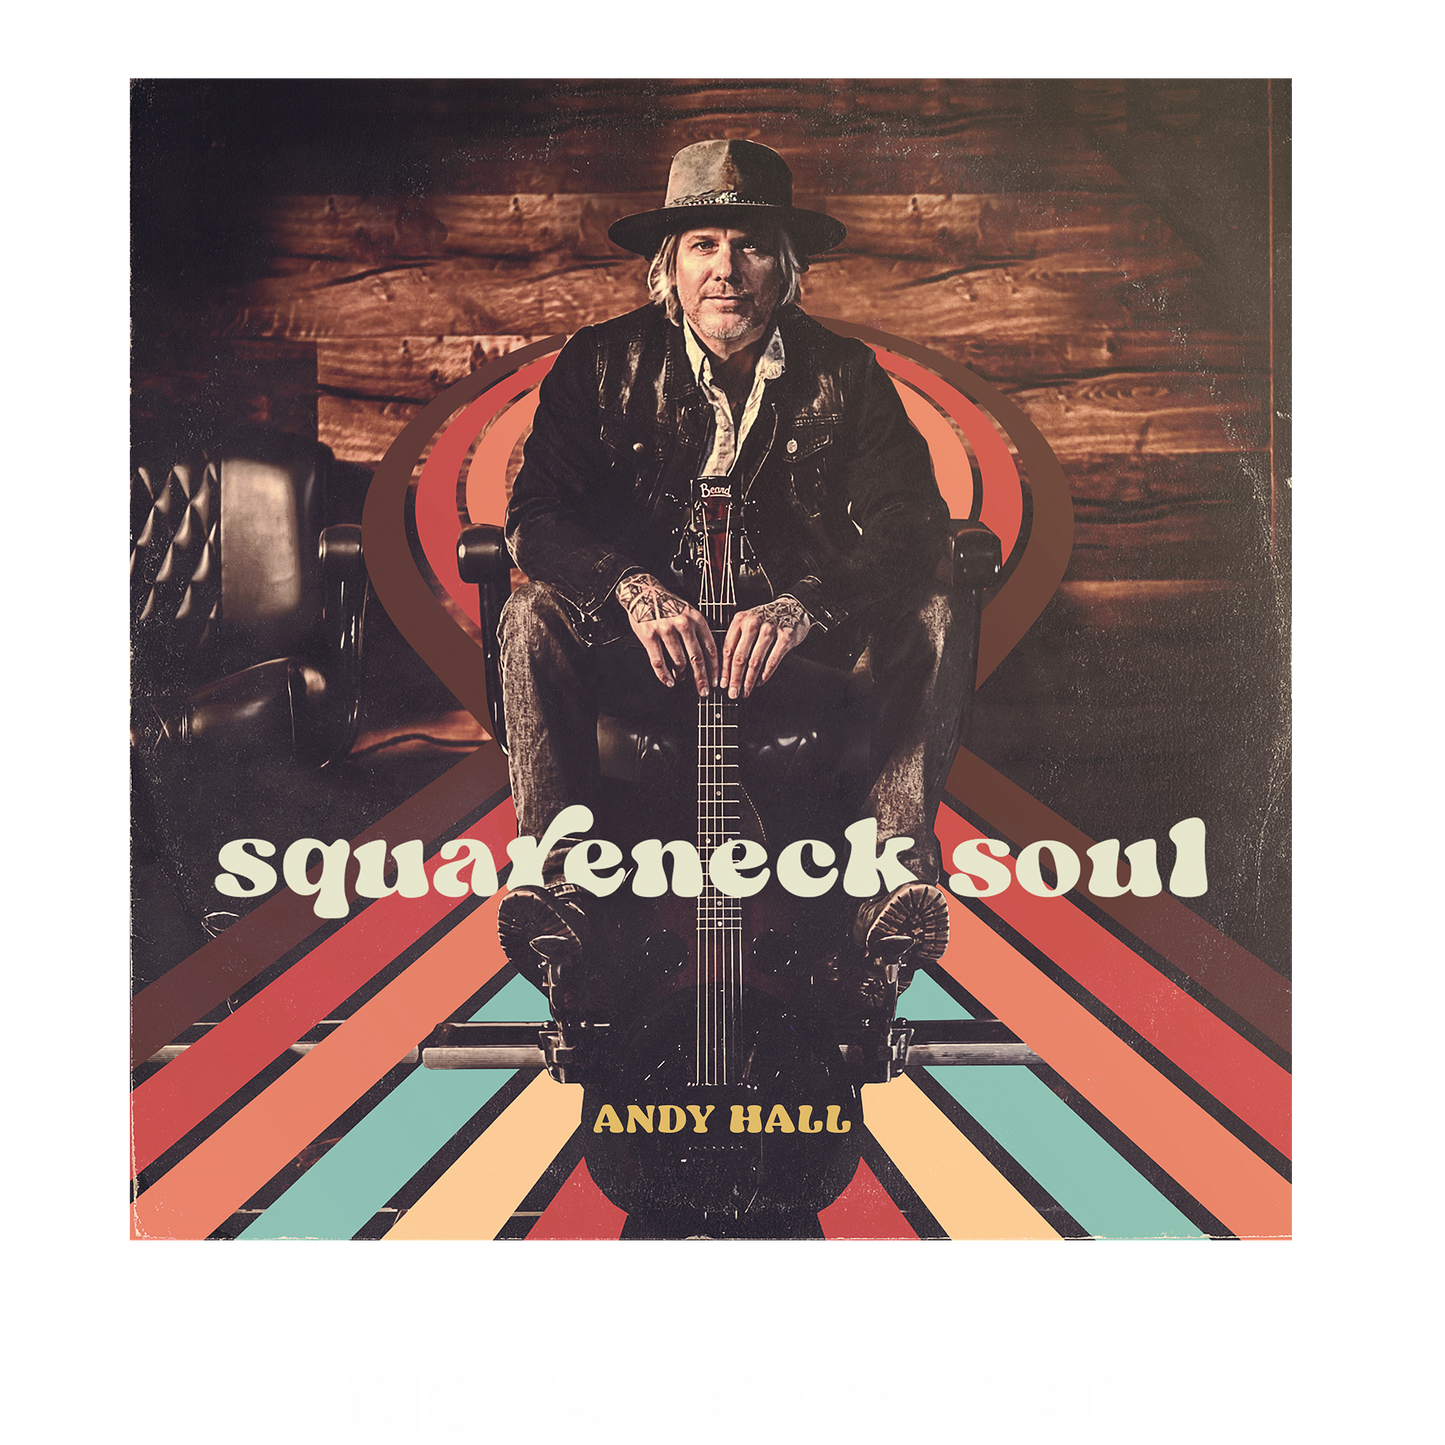 Andy Hall - Squareneck Soul Digital Download